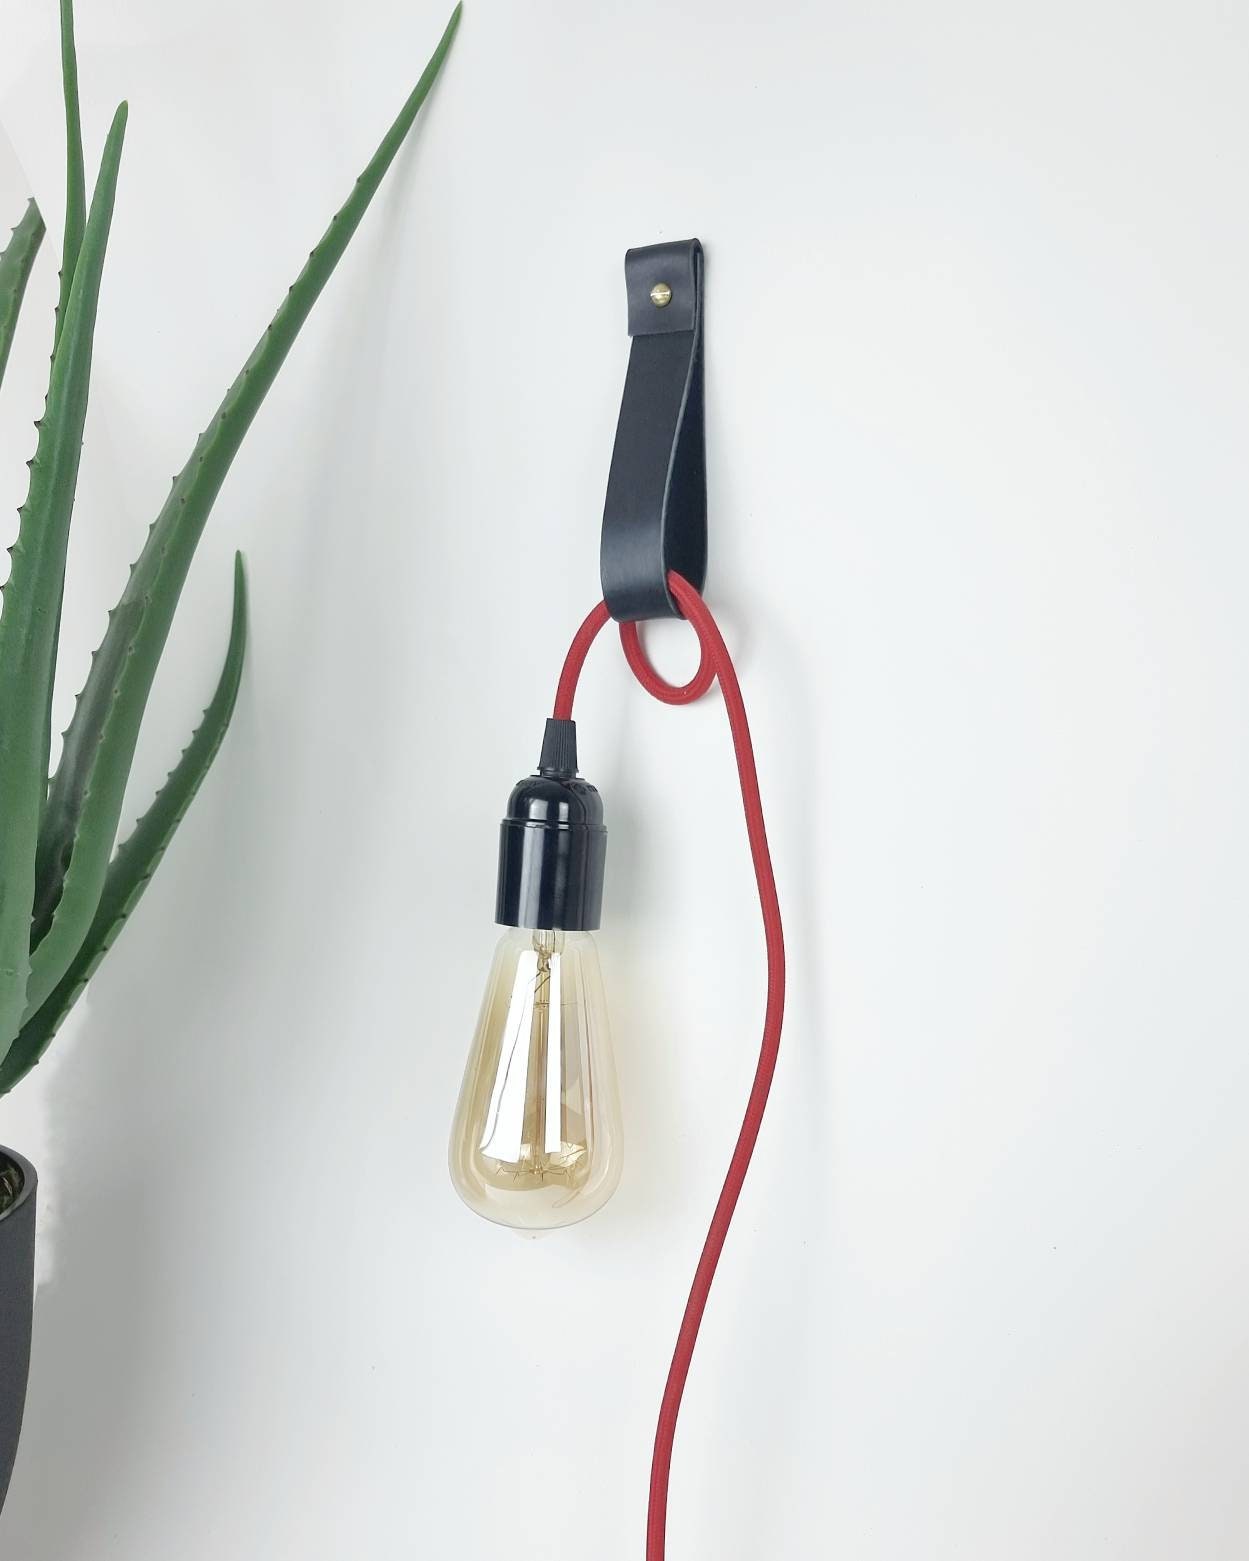 Leather Strap hanger medium for pendant light, clothes hook | bathroom decor | bedside light not included